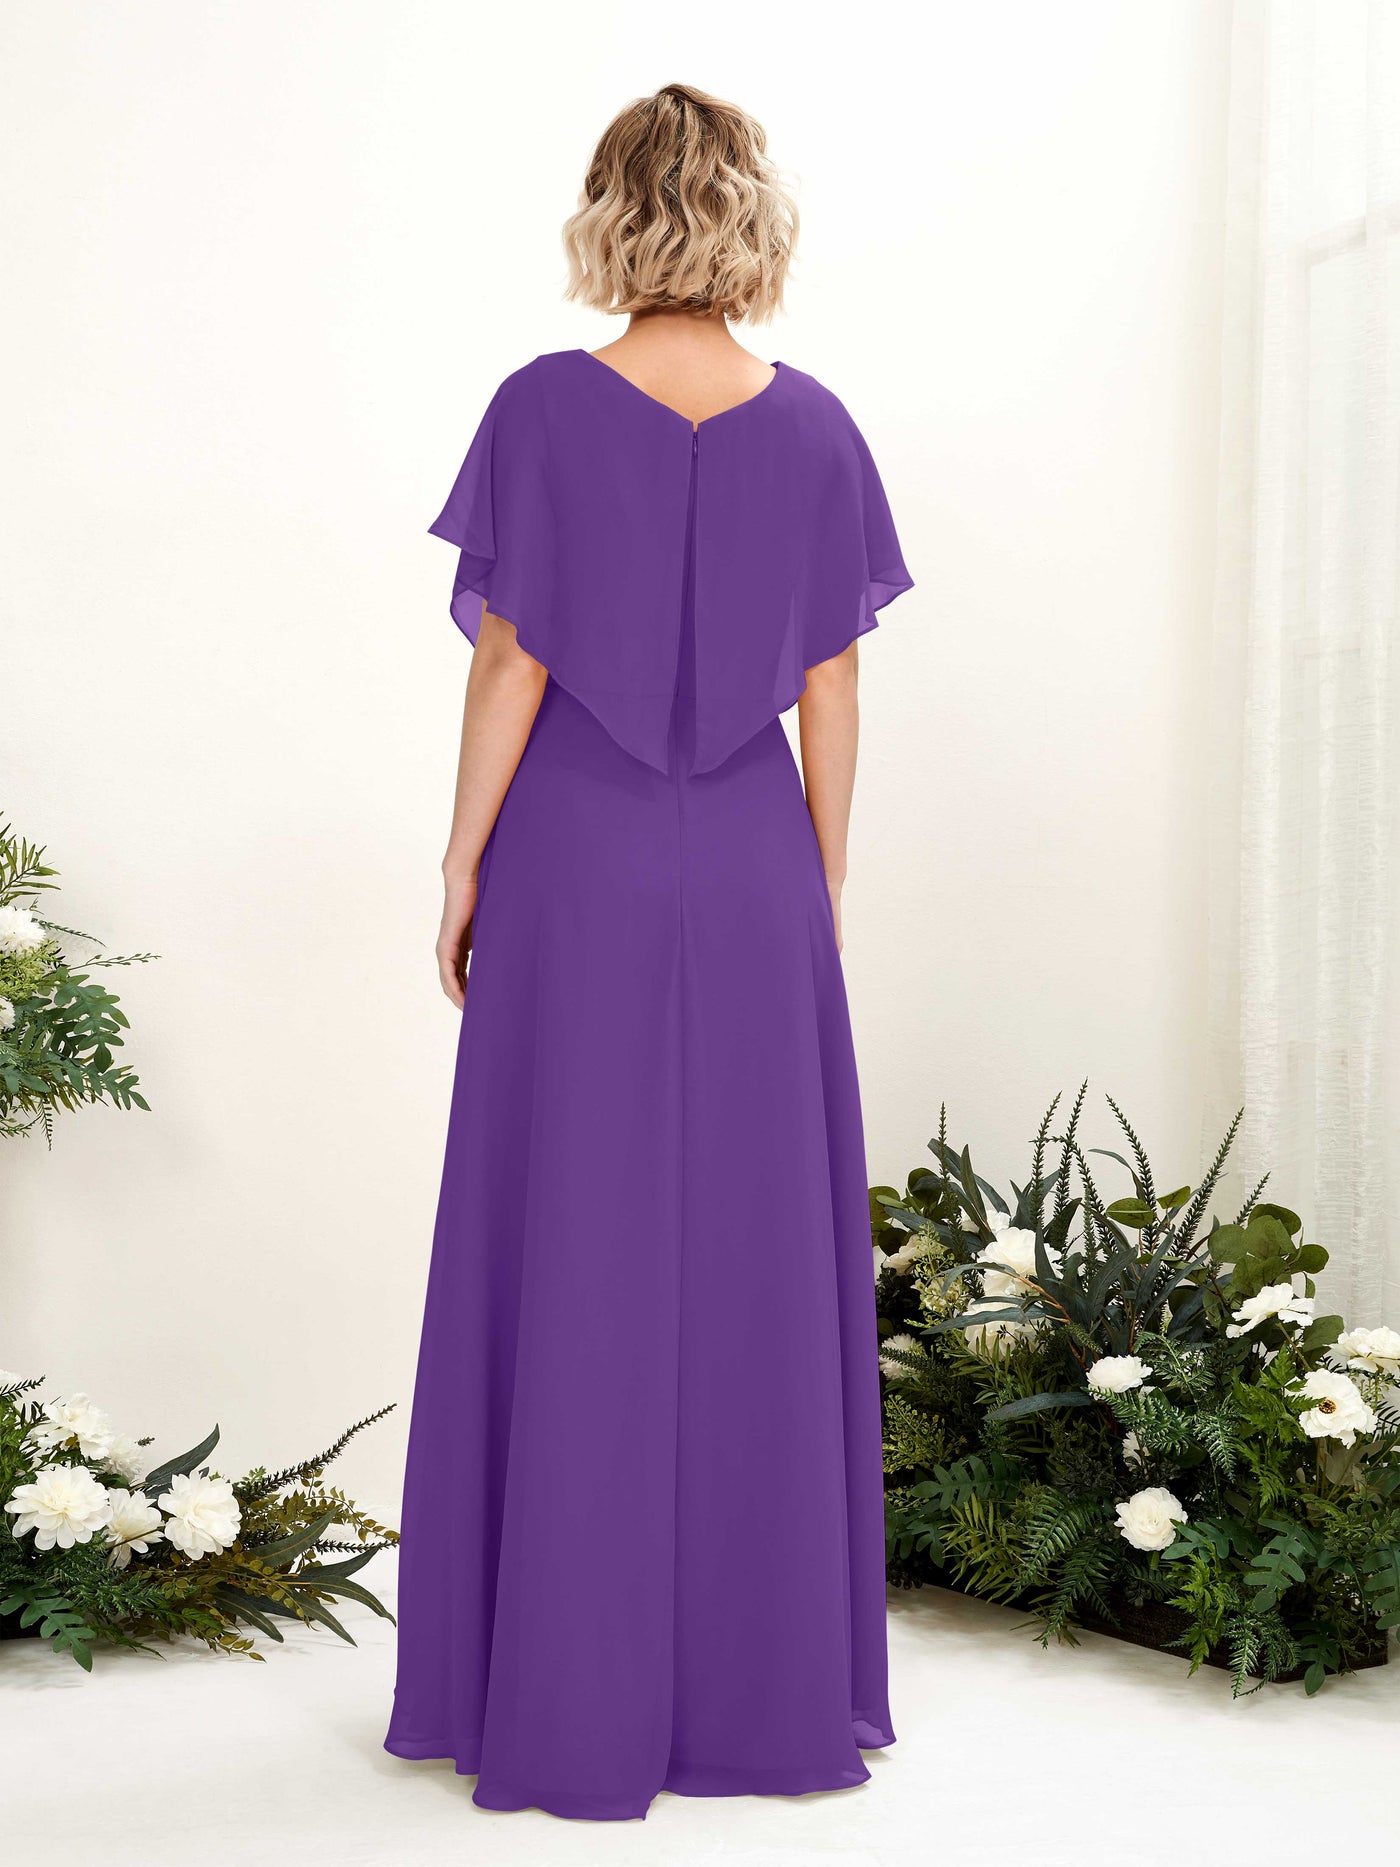 Regency Bridesmaid Dresses Bridesmaid Dress A-line Chiffon V-neck Full Length Short Sleeves Wedding Party Dress (81222128)#color_regency